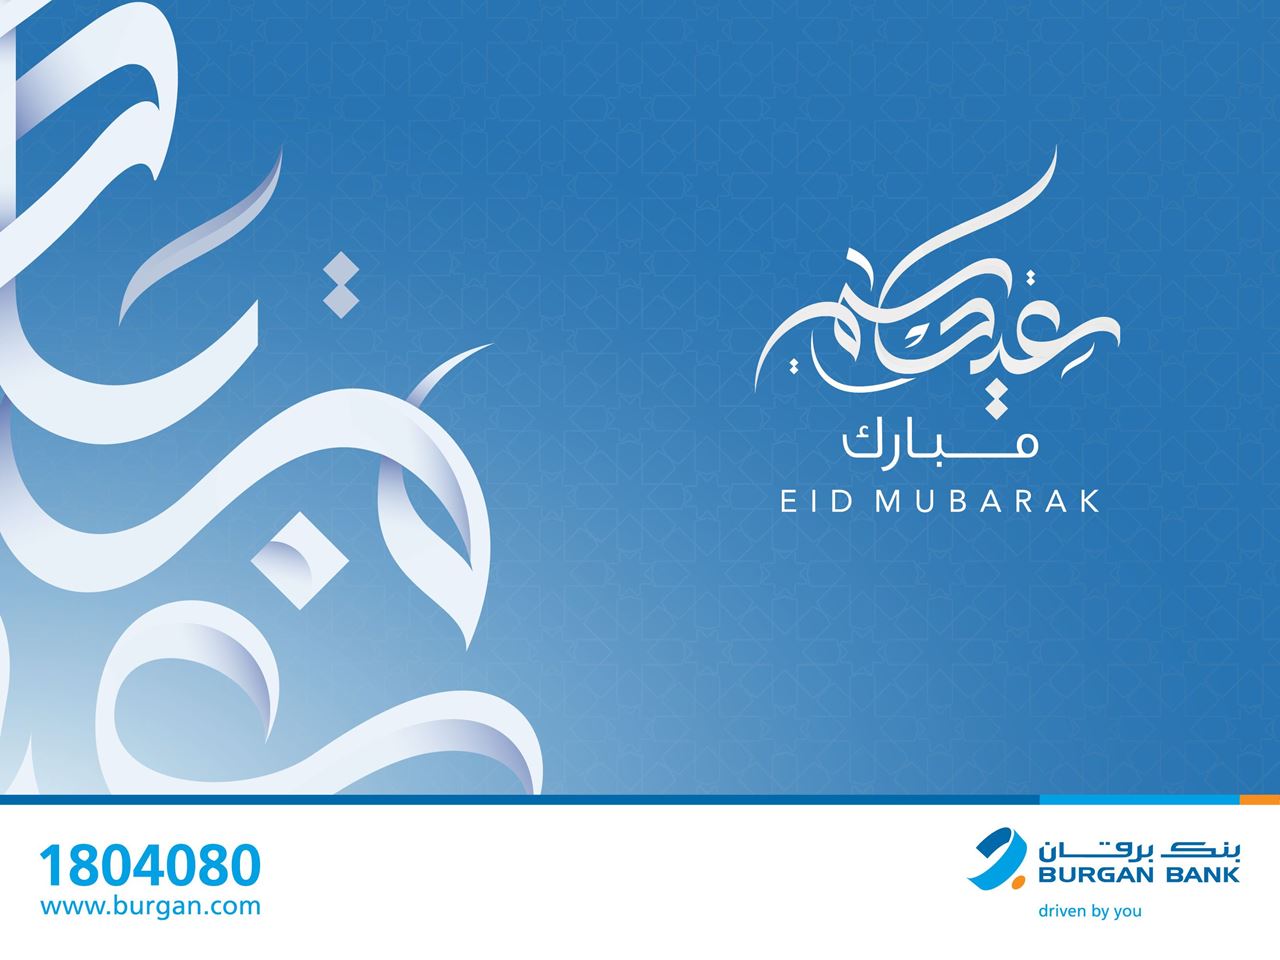 Working hours of Burgan Bank during Eid Al Adha 2022